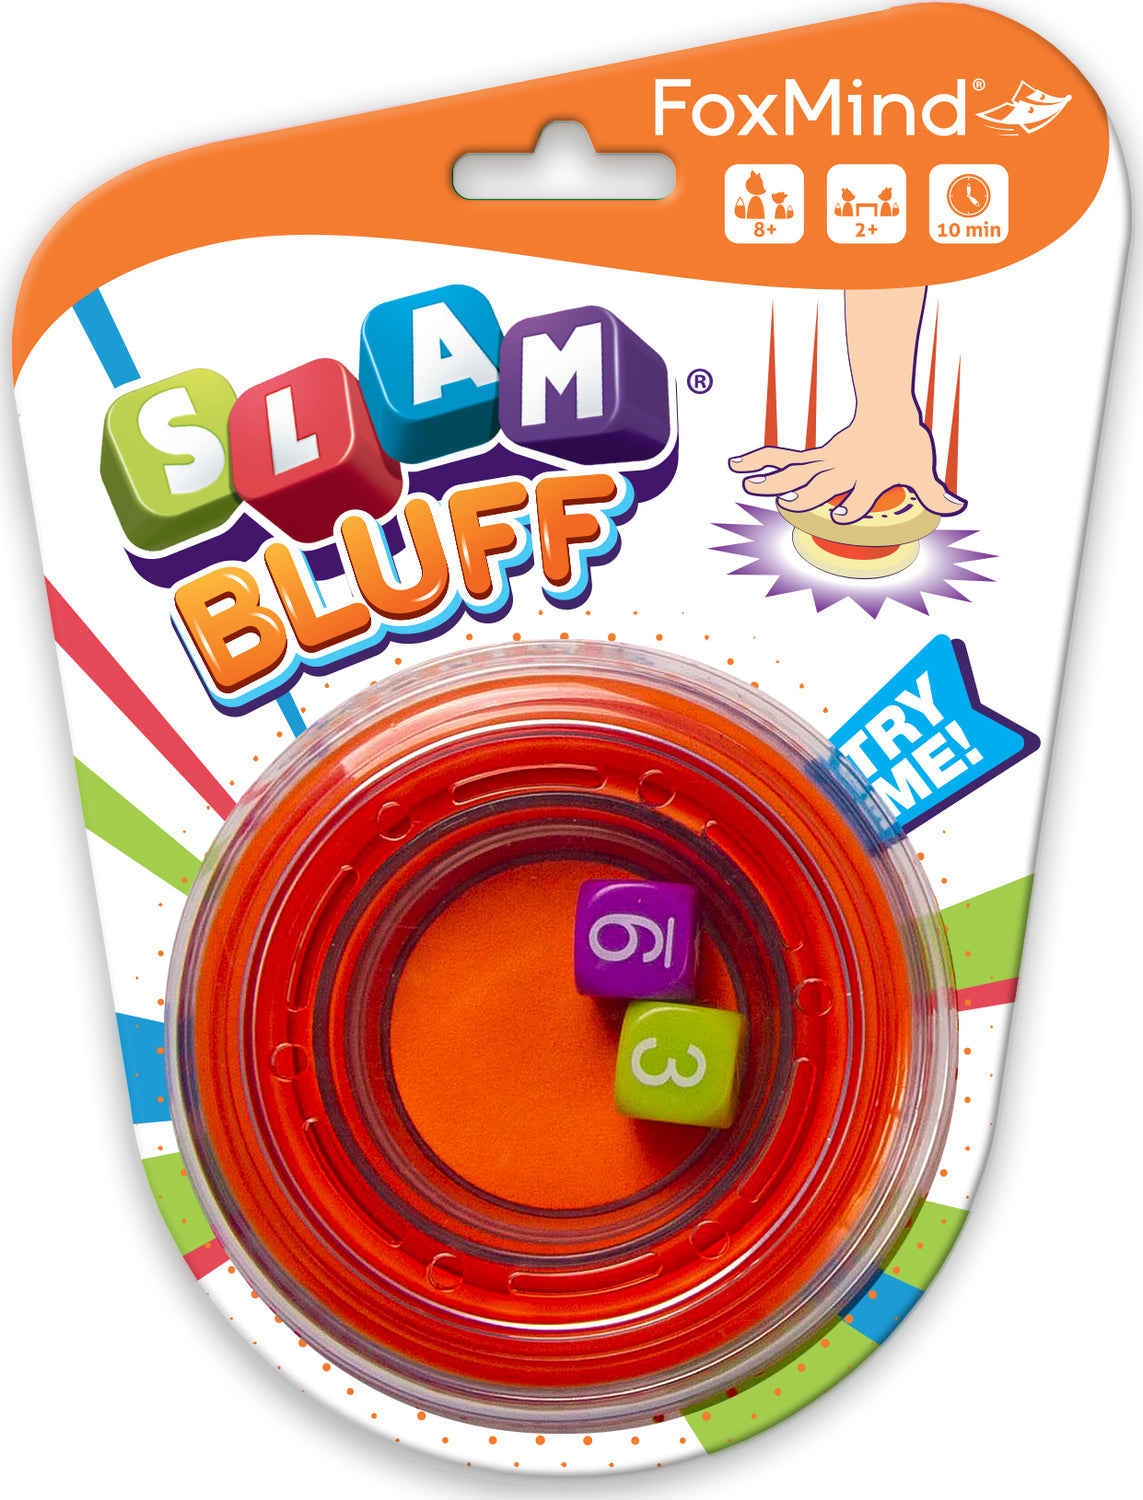 Slam Bluff